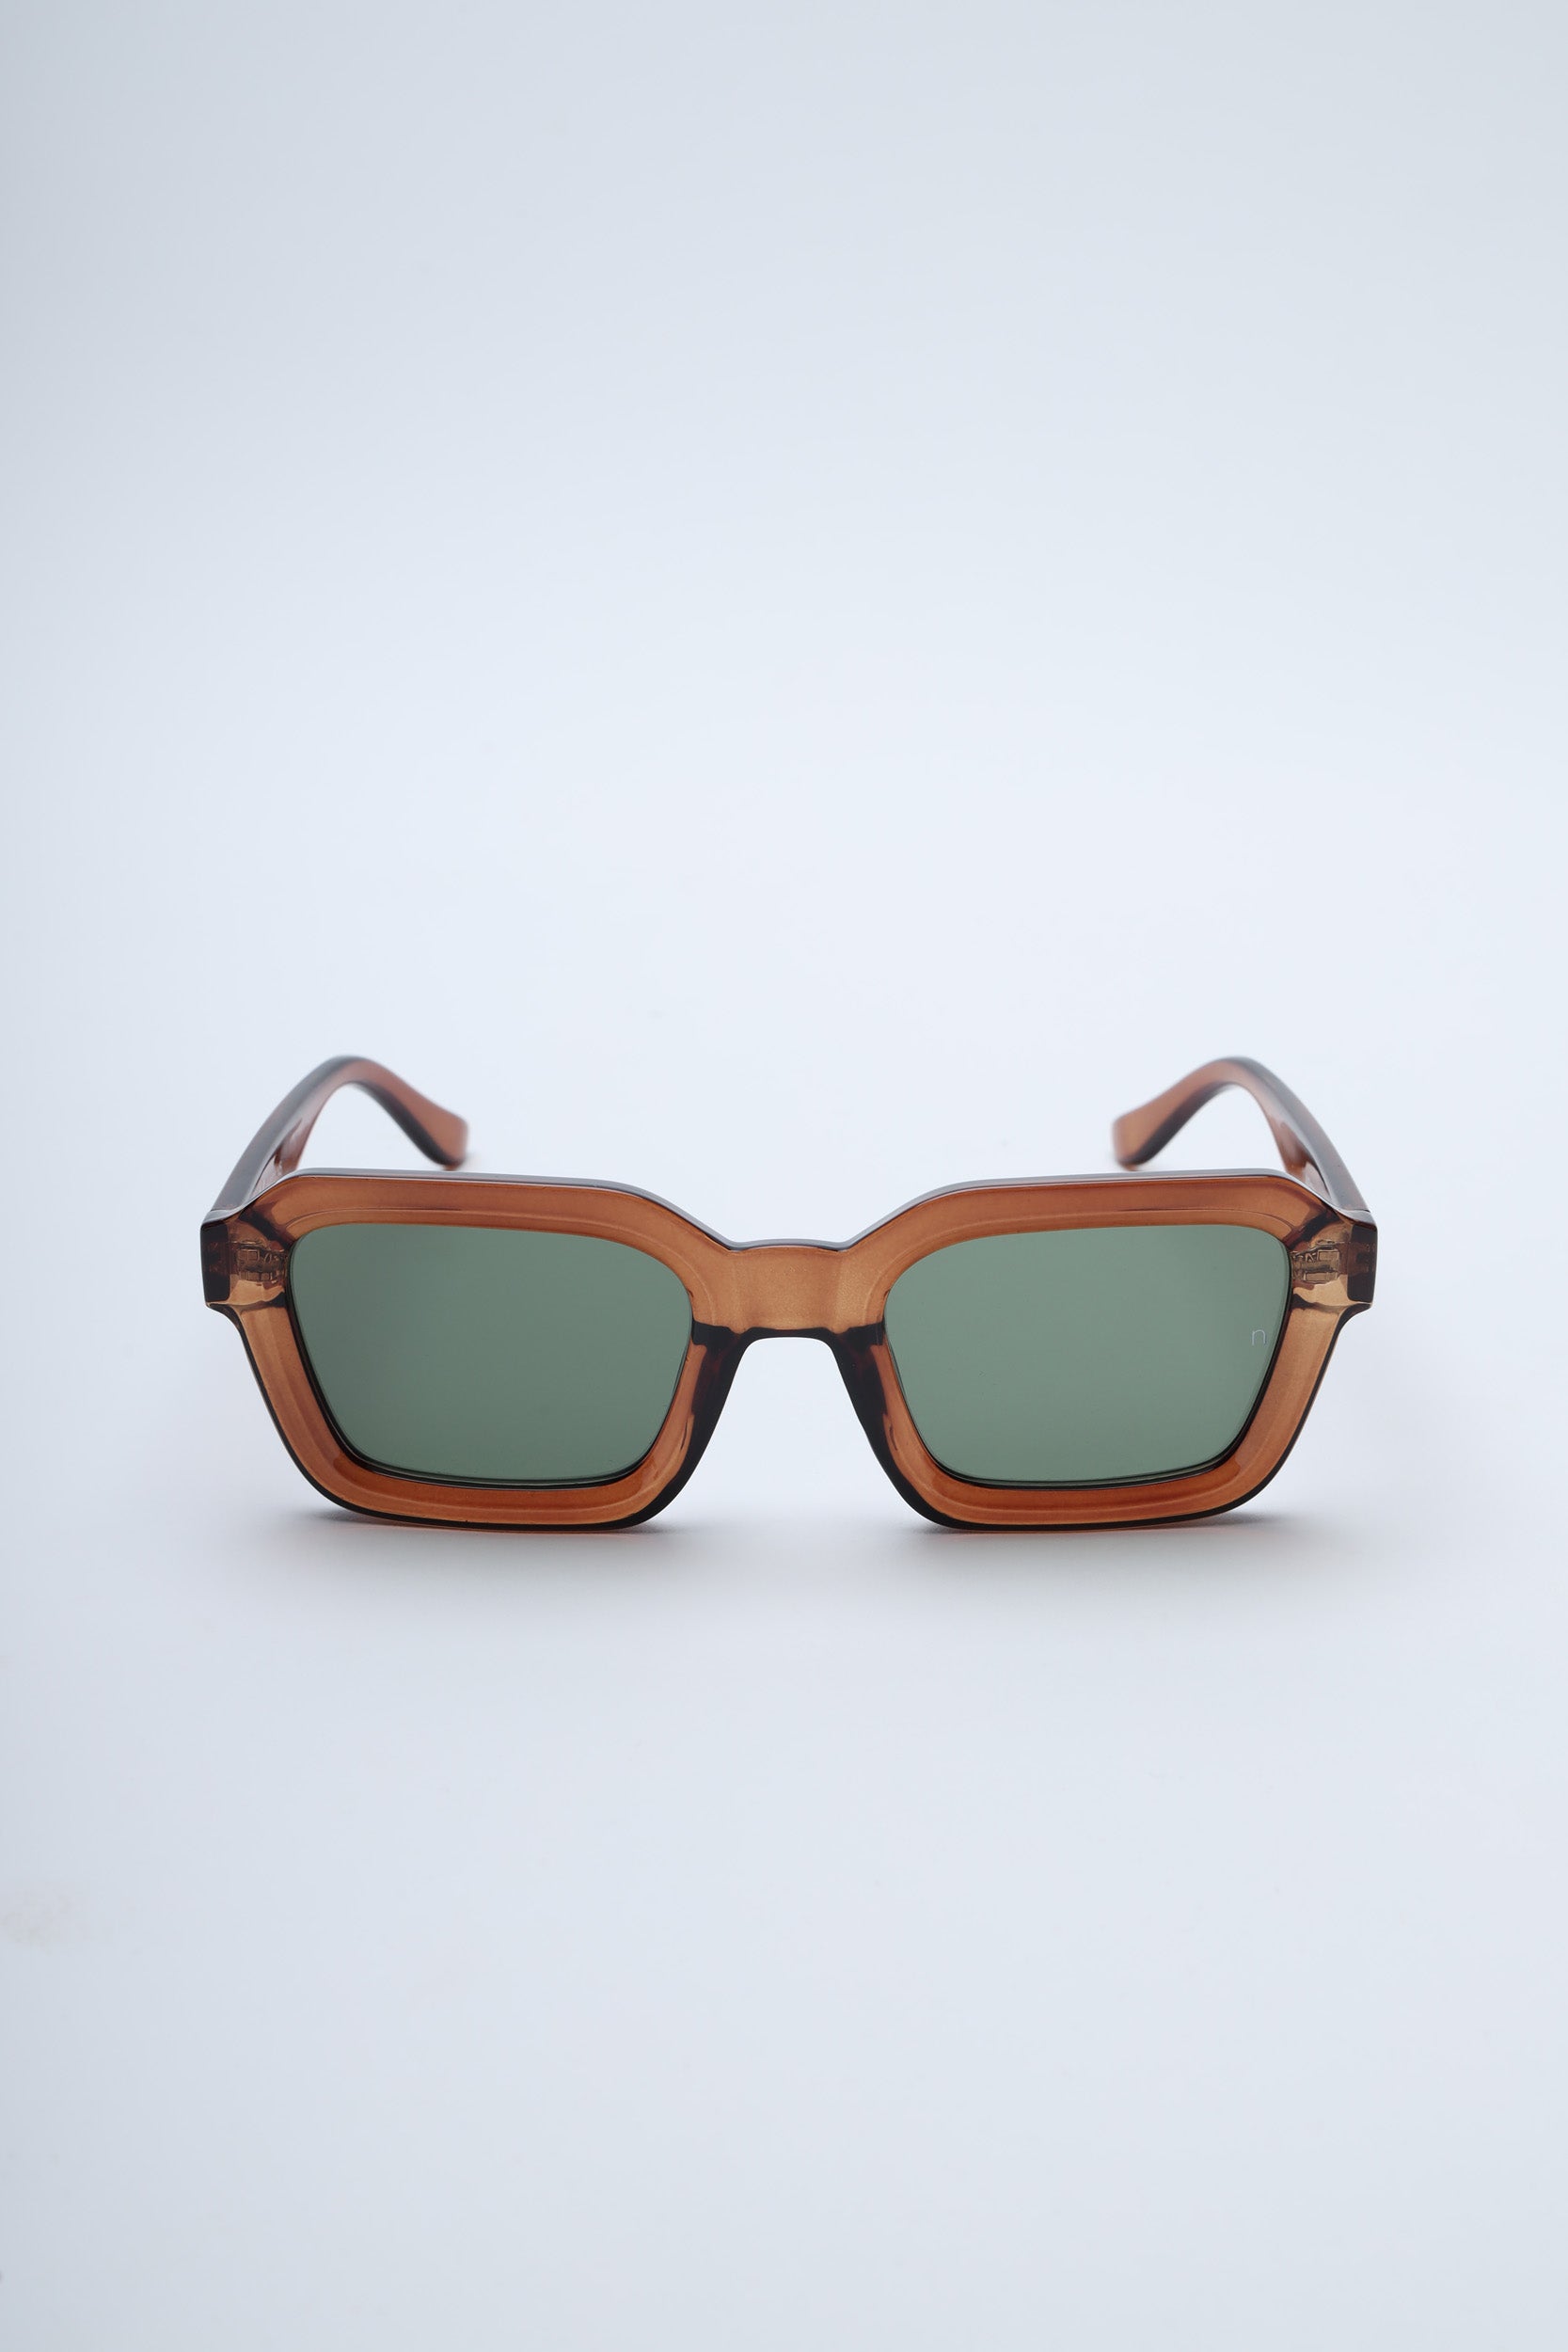 NS1008GFGL PC Green Frame with Green Glass Lens Sunglasses